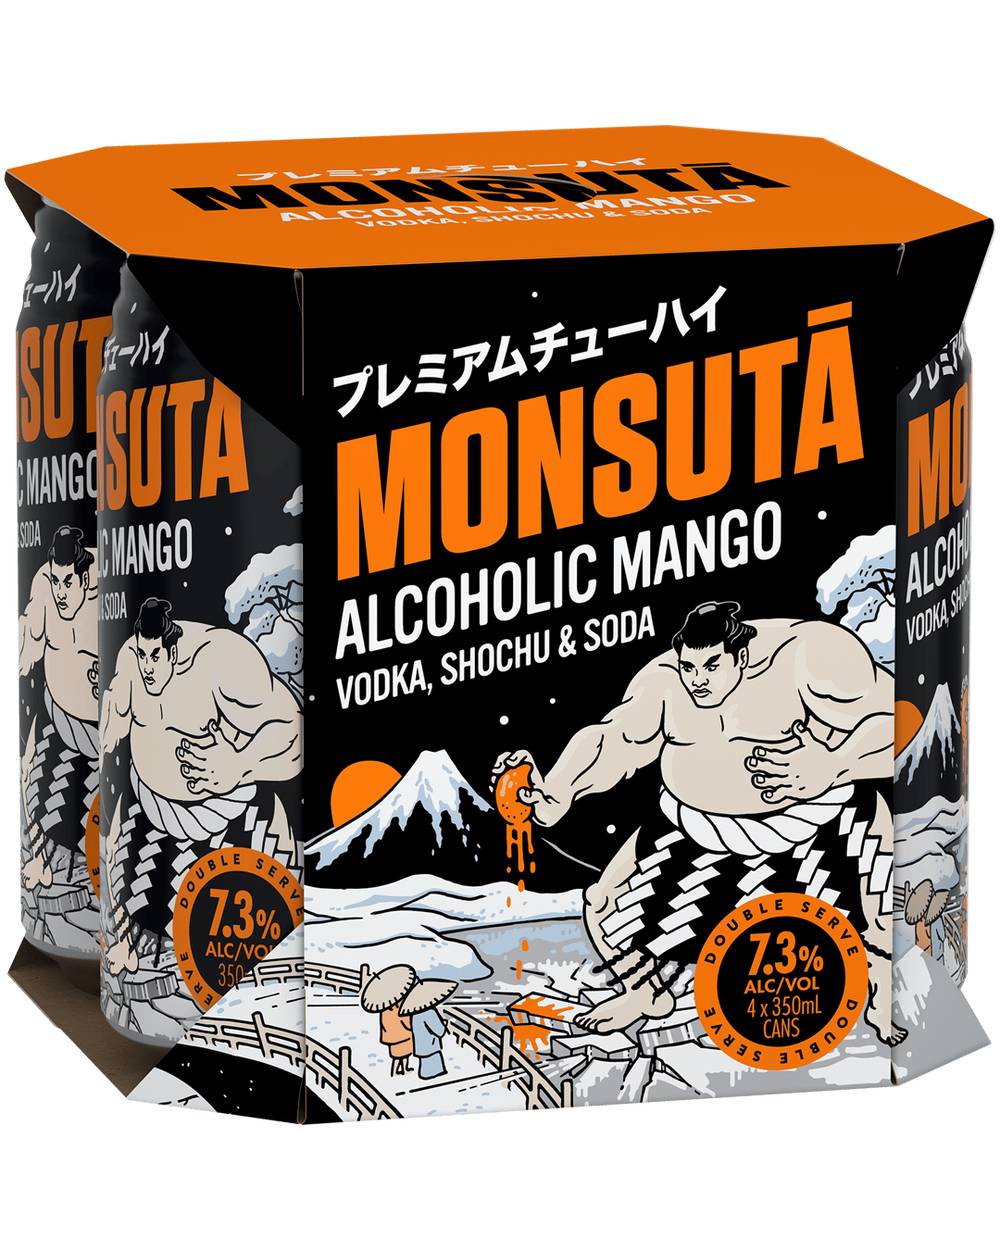 Monsuta Mango Chuhai 7.3% Can 4x350mL